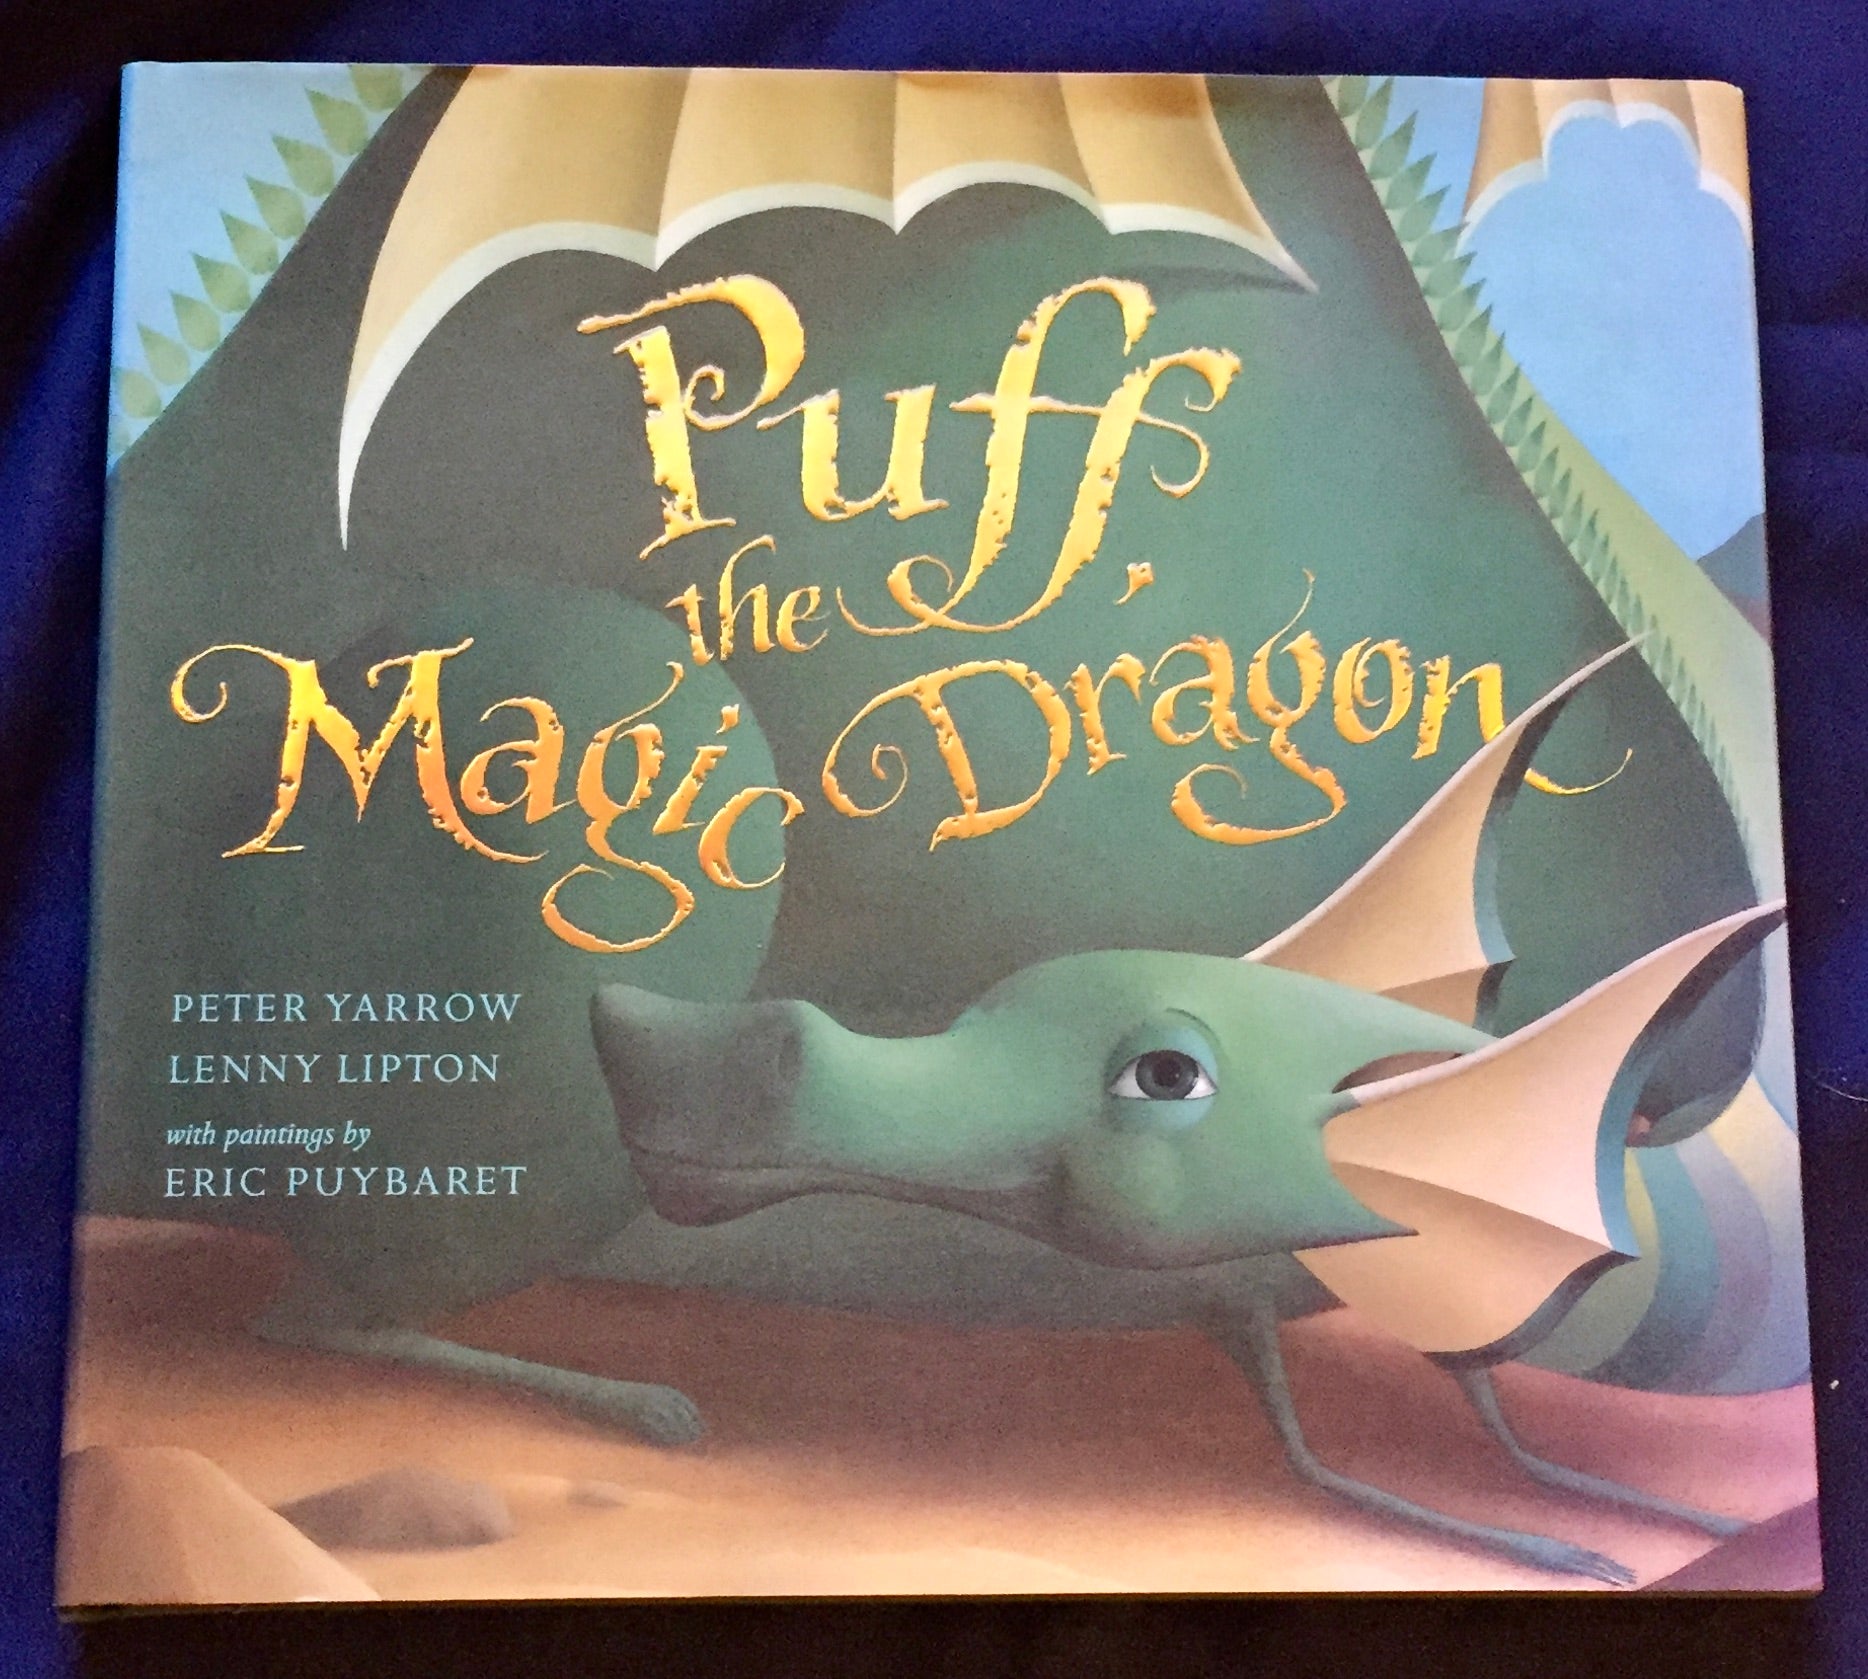 Dragons Magic Painting Book [Book]